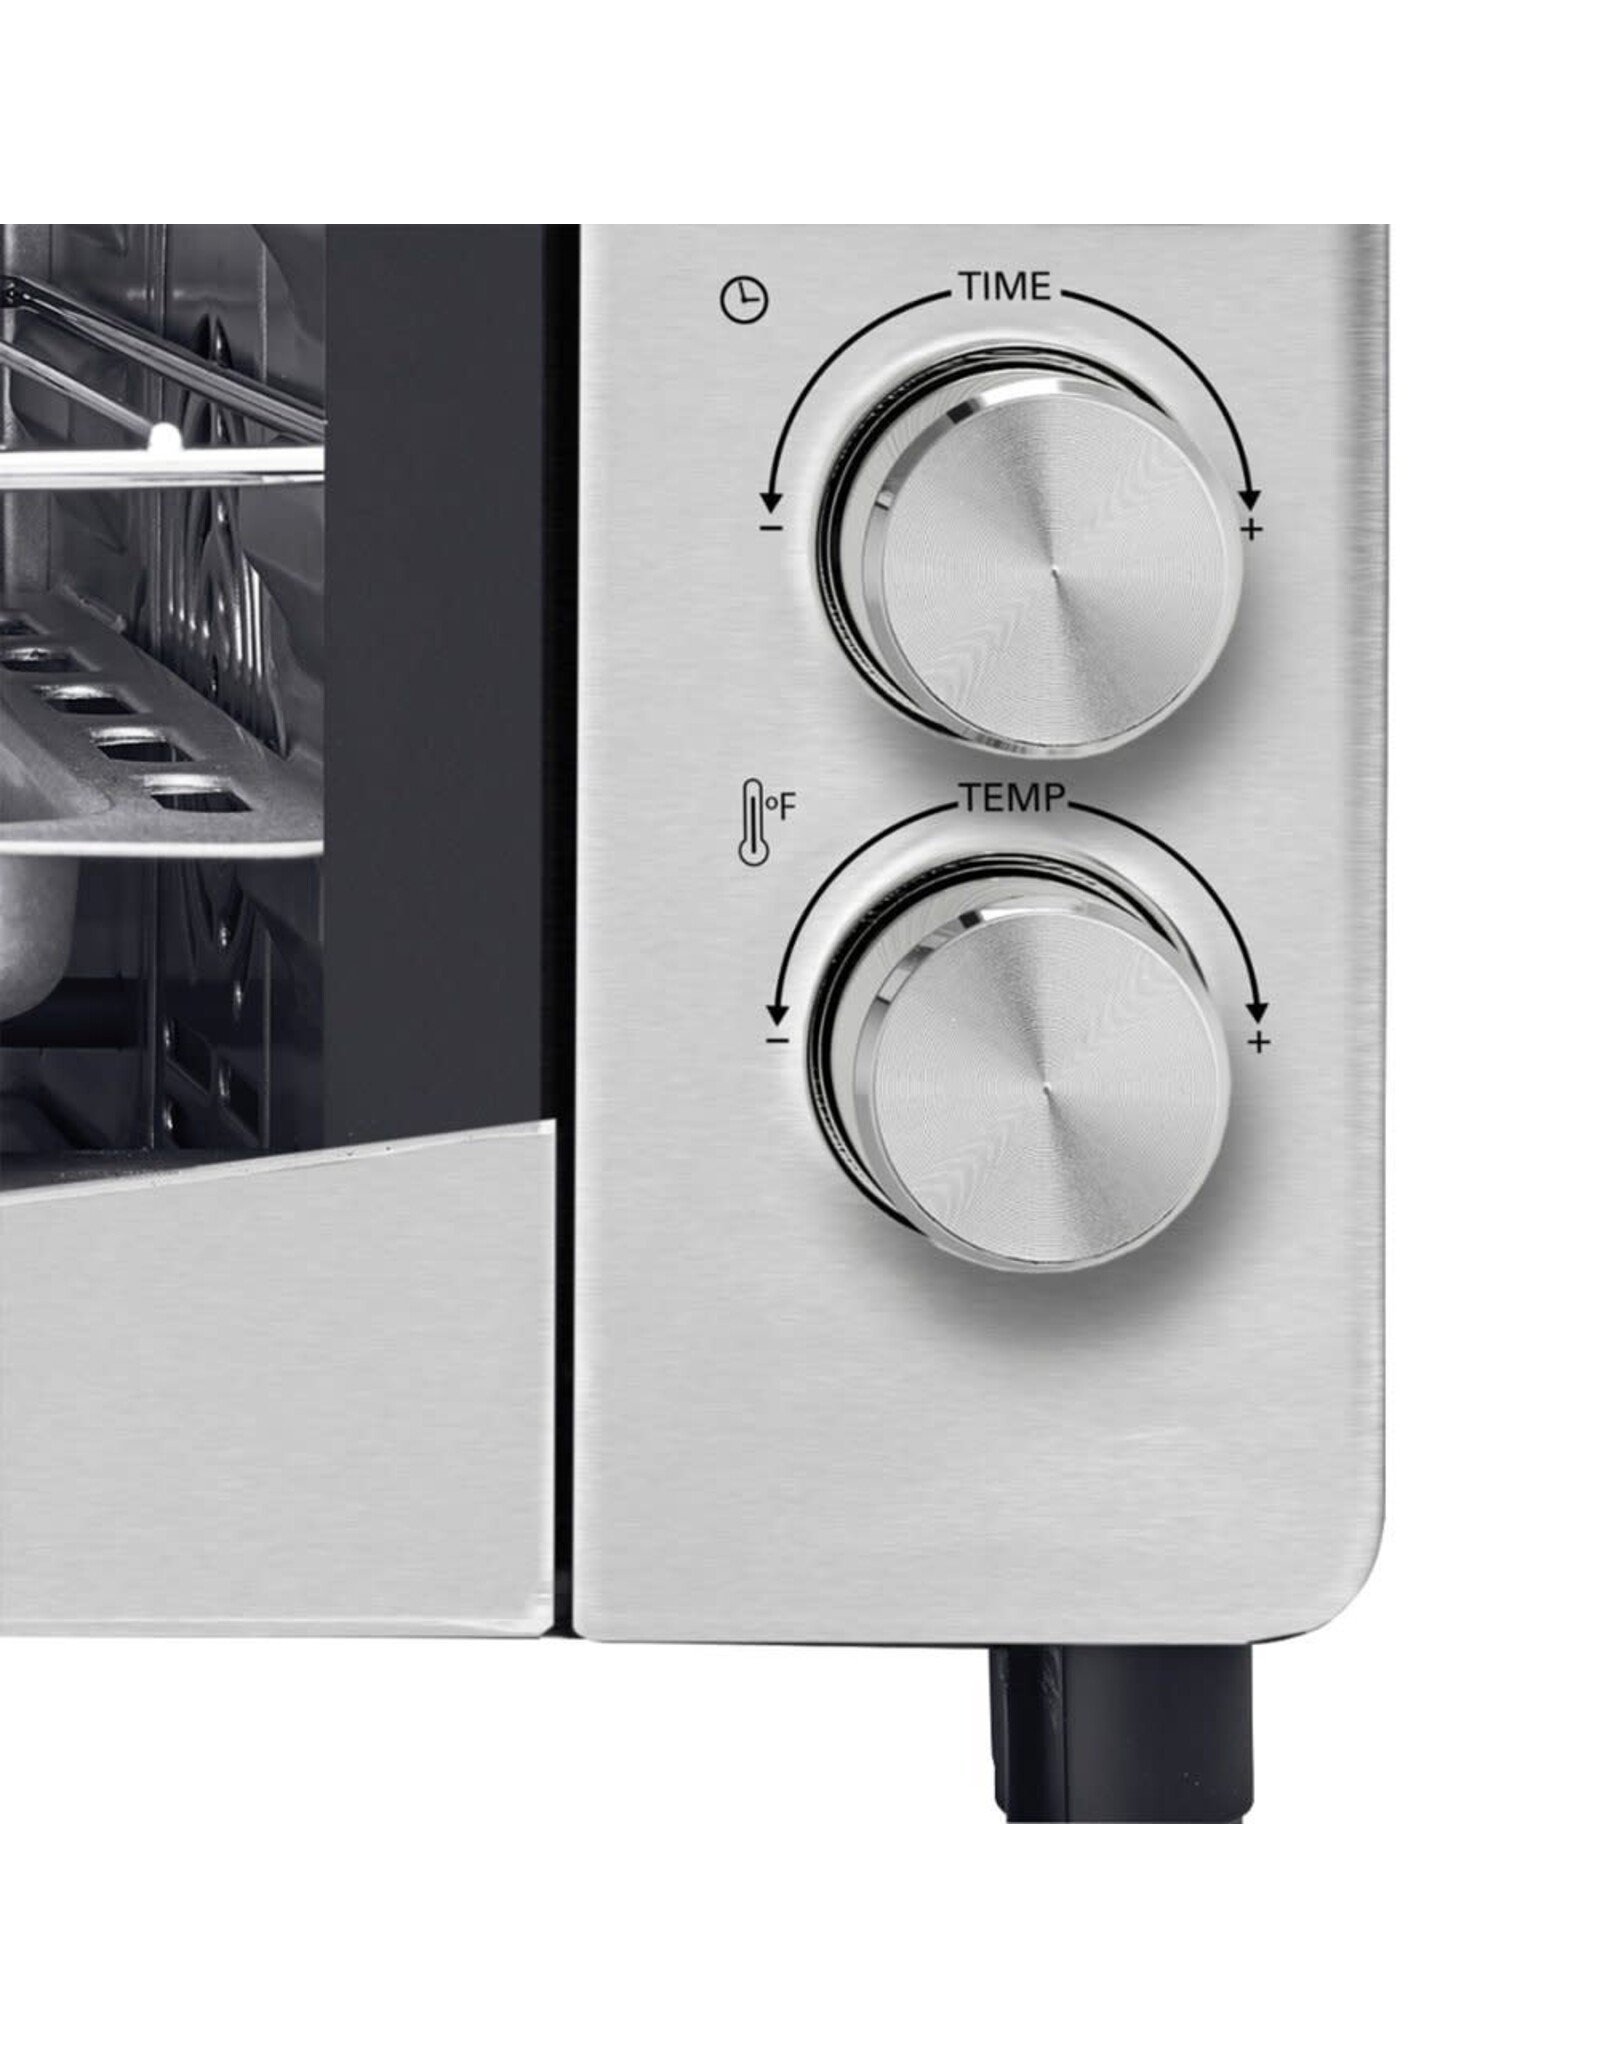 Bella - Pro Series 4-Slice Wide-Slot Toaster - Stainless Steel